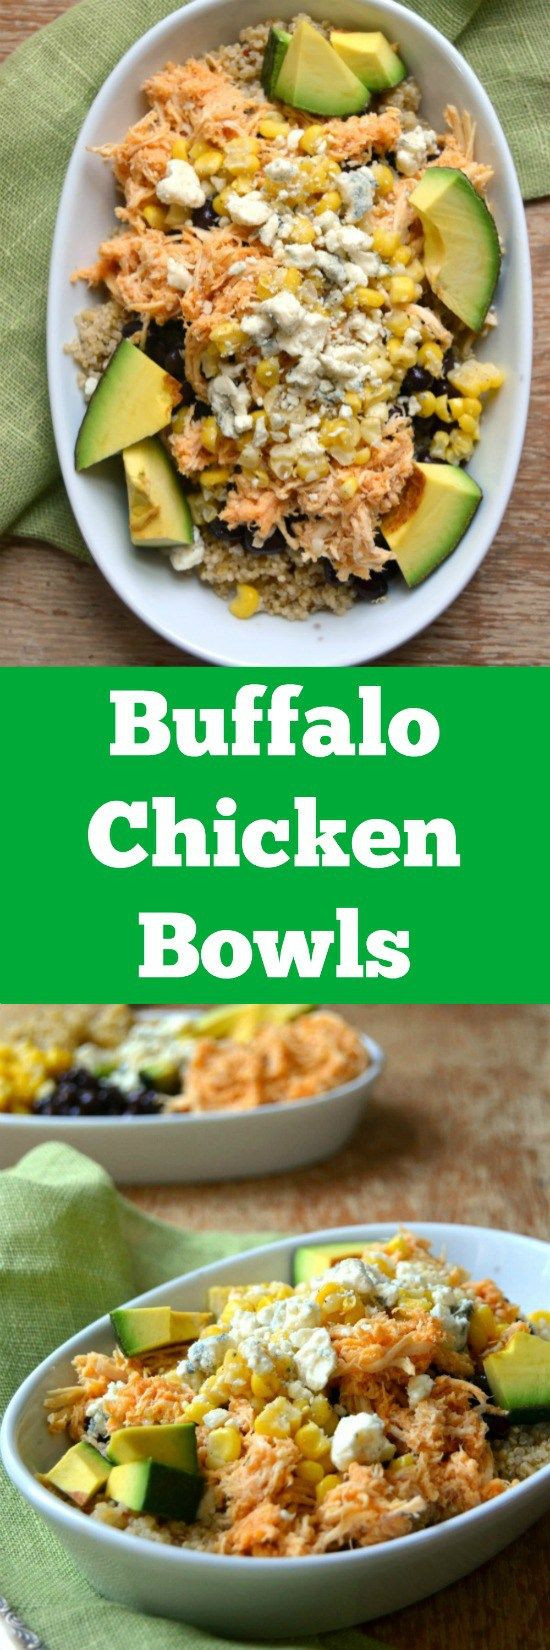 Buffalo Chicken Recipes Healthy
 Best 25 Healthy Buffalo Chicken ideas on Pinterest